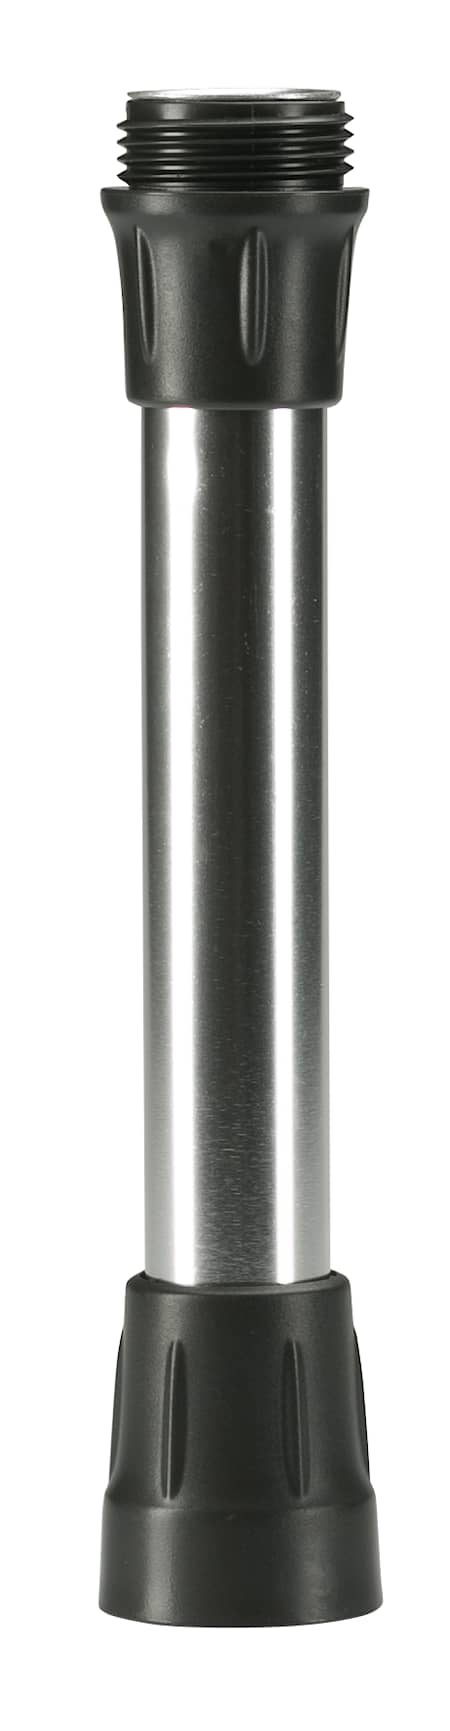 Gardena Telescopic Pipe Extension For Rain Water Tank Pumps